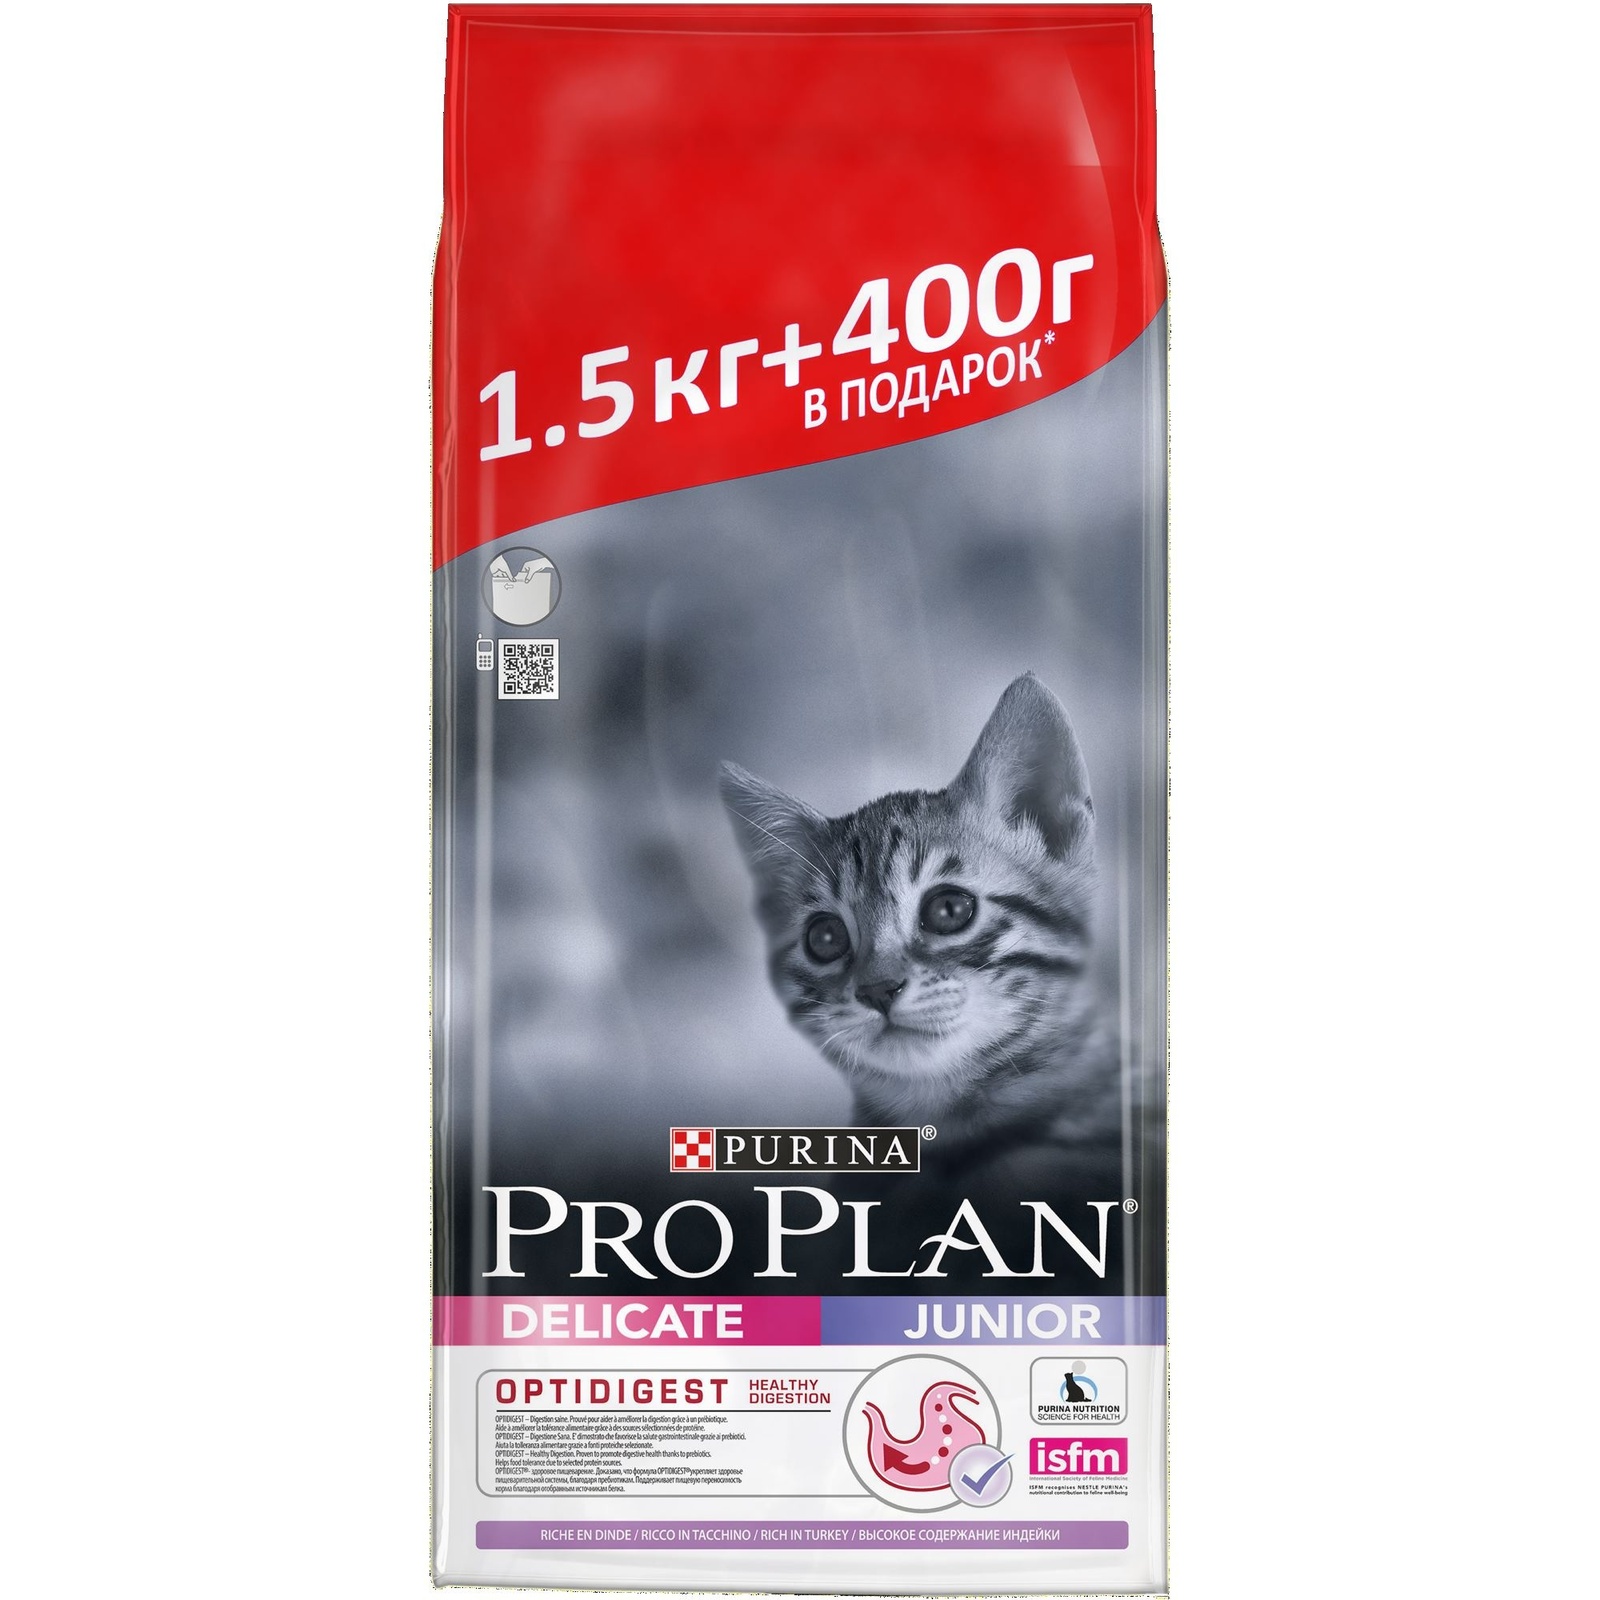 Pro plan екатеринбург. Корм для котят Purina Pro Plan delicate с индейкой 400 г. PROPLAN для котят сухой 400+400. Про план Деликат для котят. Корм для котят Purina Pro Plan delicate с индейкой 1.5 кг.